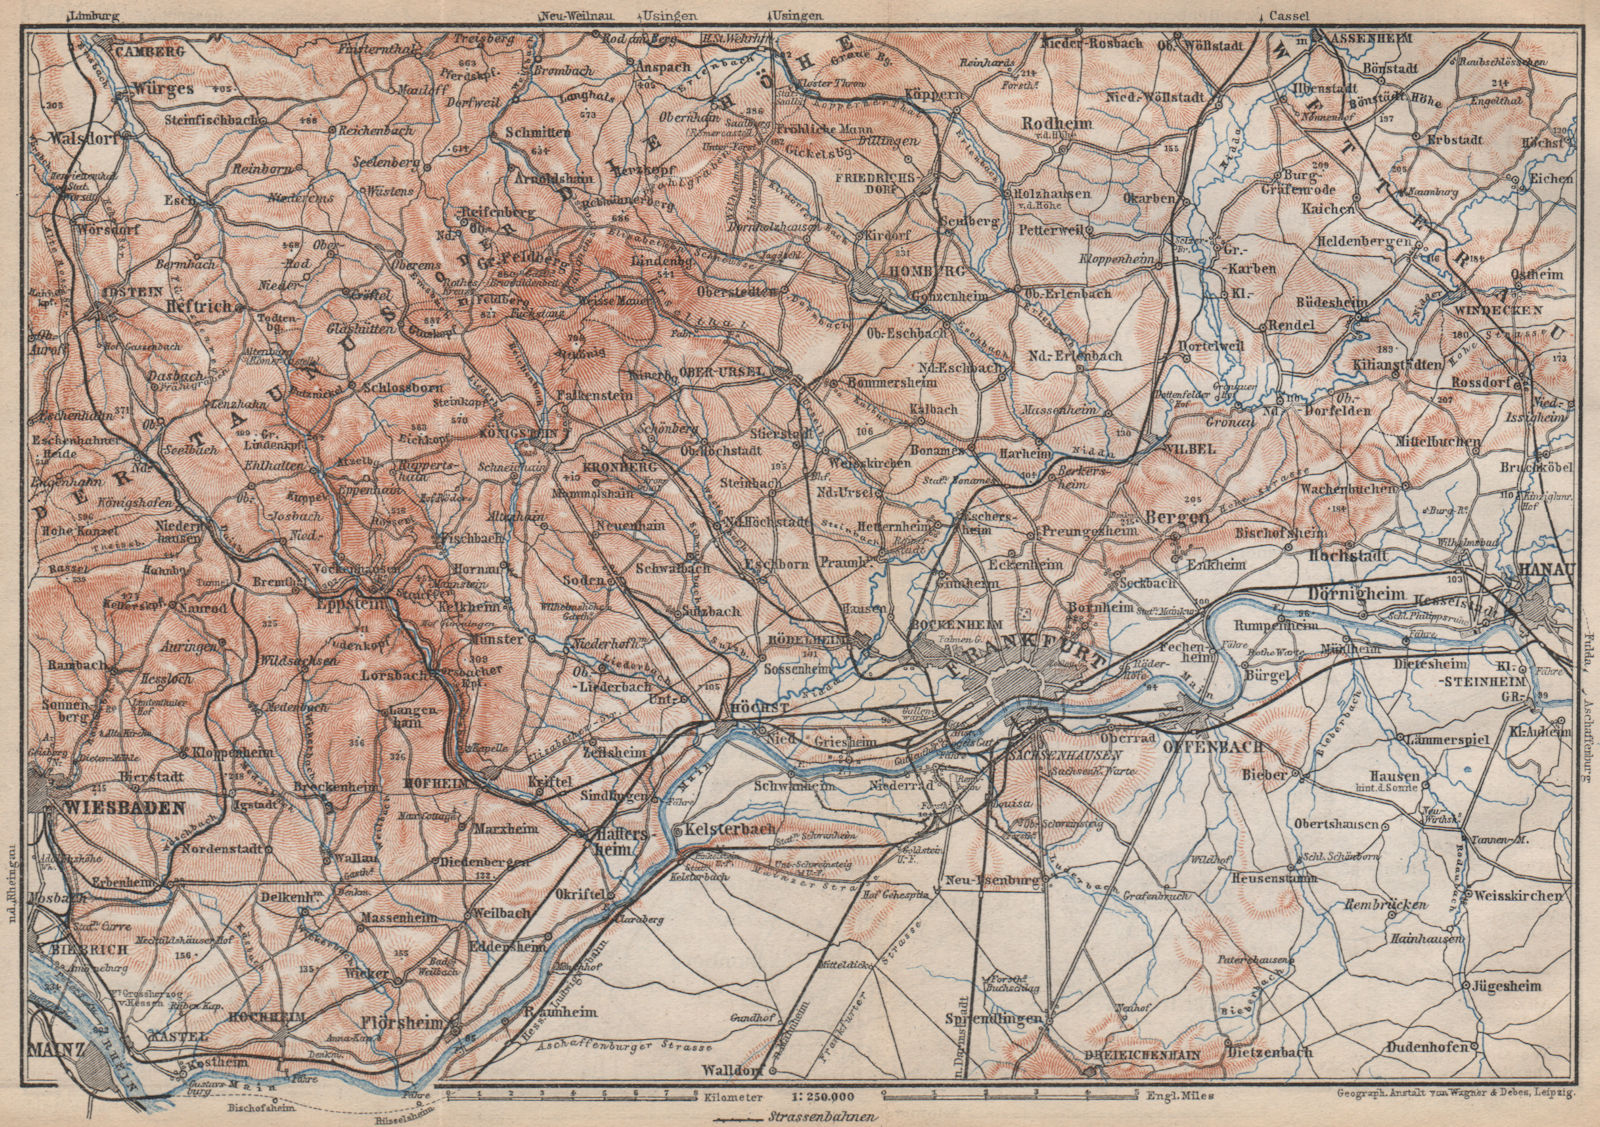 Associate Product TAUNUS Mountains. Wiesbaden Frankfurt am Main Hanau. Deutschland karte 1896 map